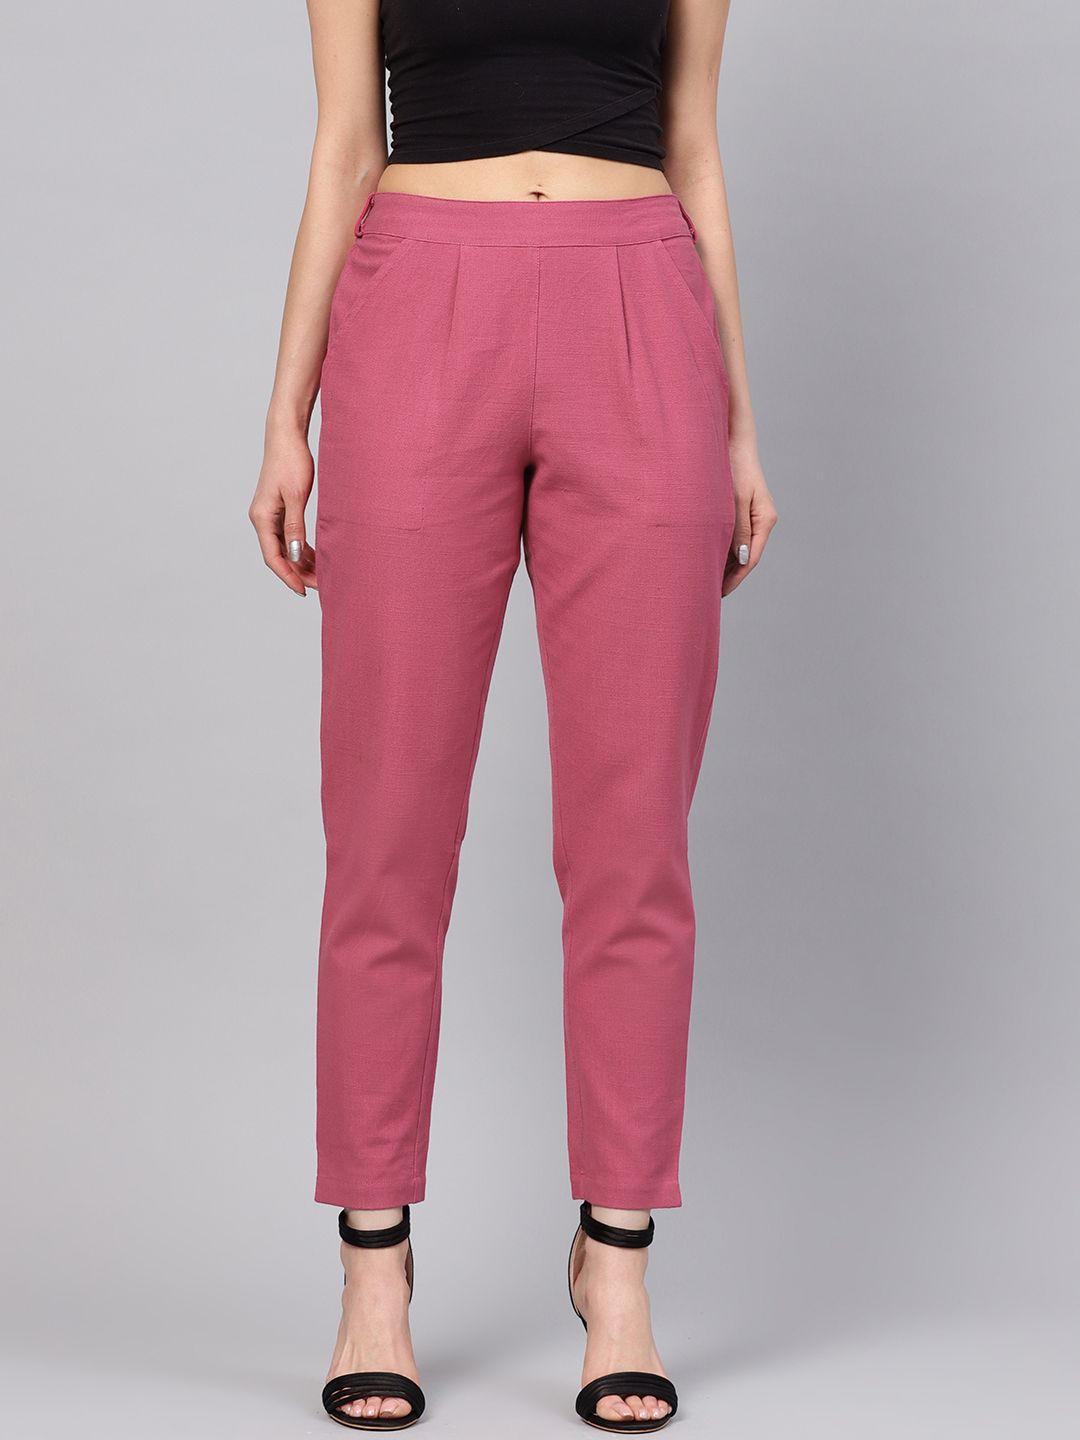 Jaipur Kurti Women Pink Regular Fit Solid Trousers Price in India